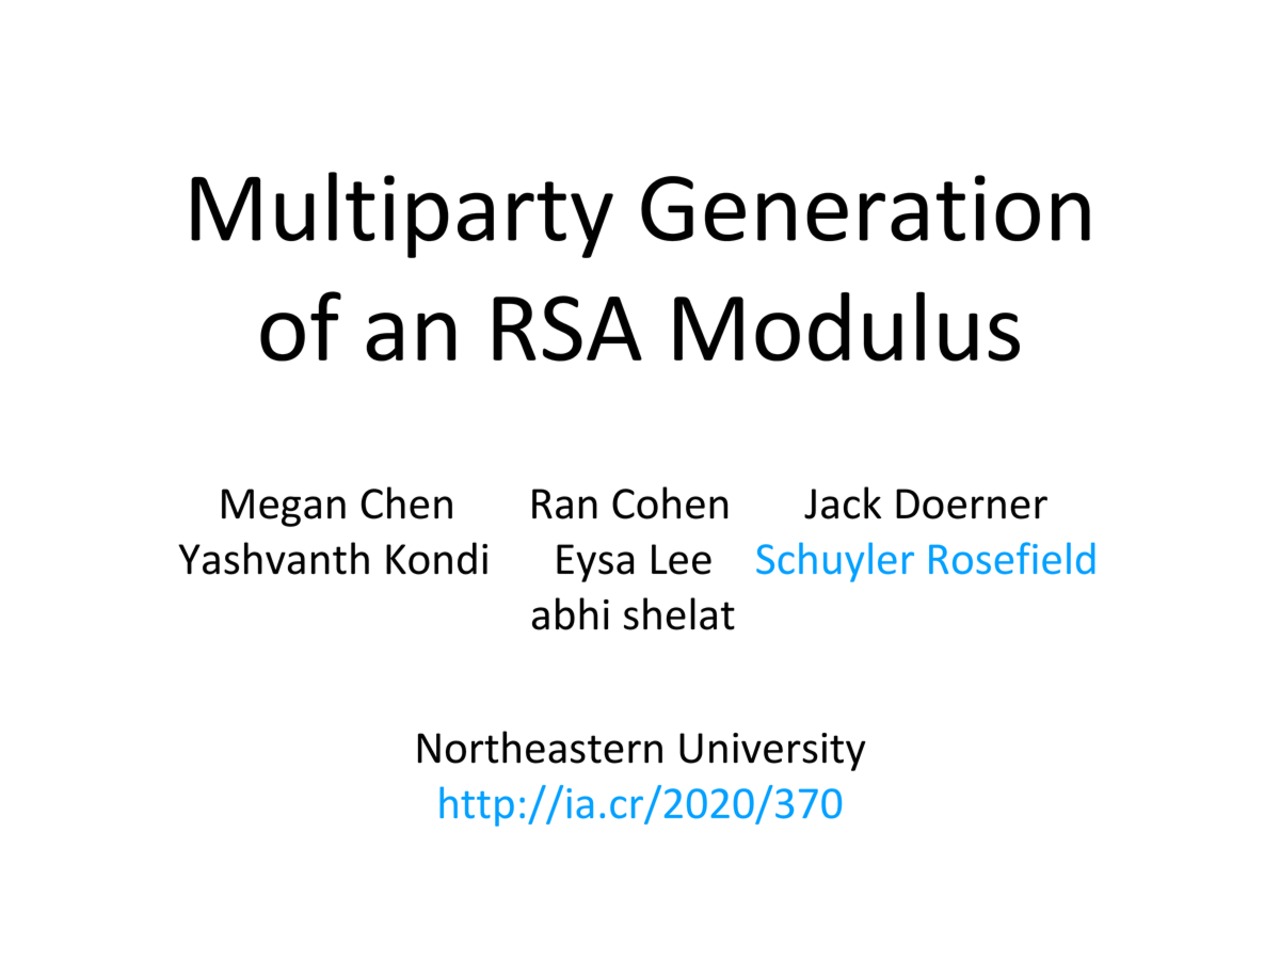 MPTS 2020 Talk 3b1: Multiparty Generation of an RSA Modulus